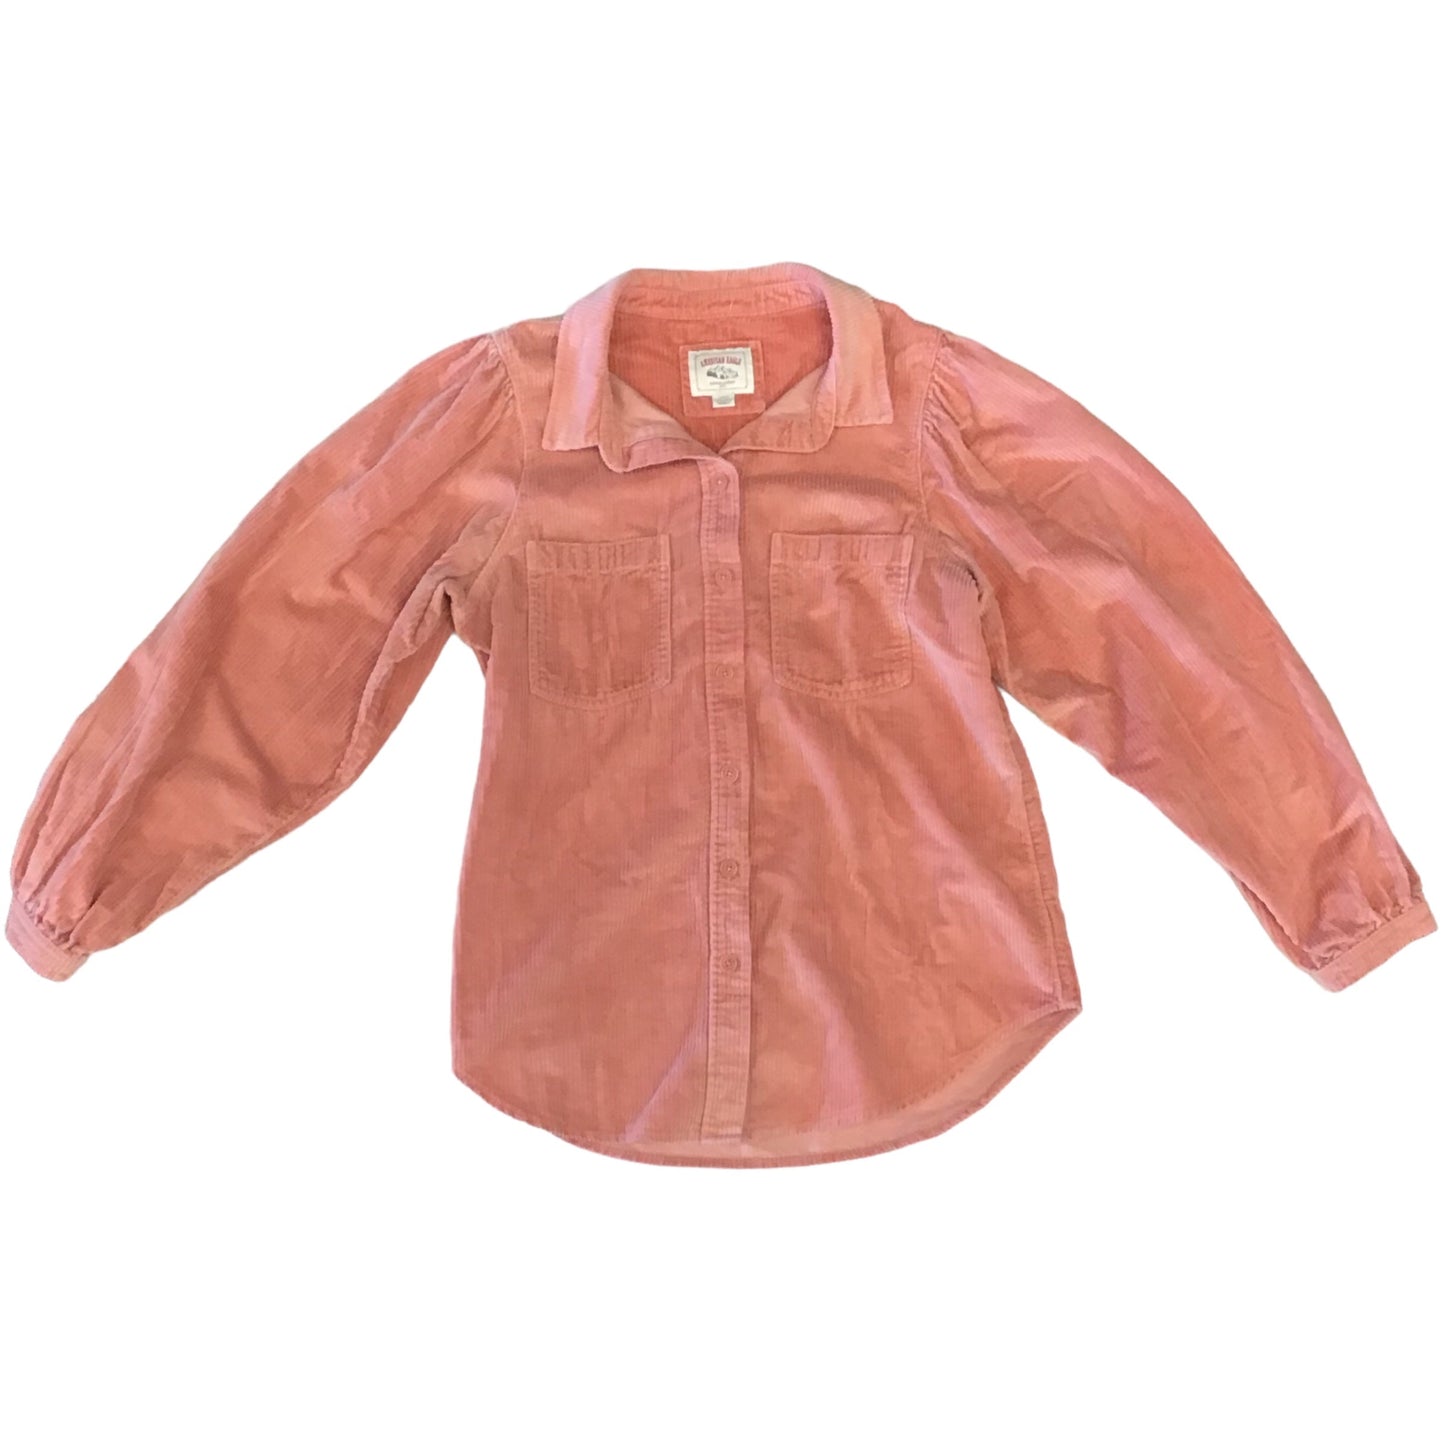 Pink Jacket Shirt American Eagle, Size S